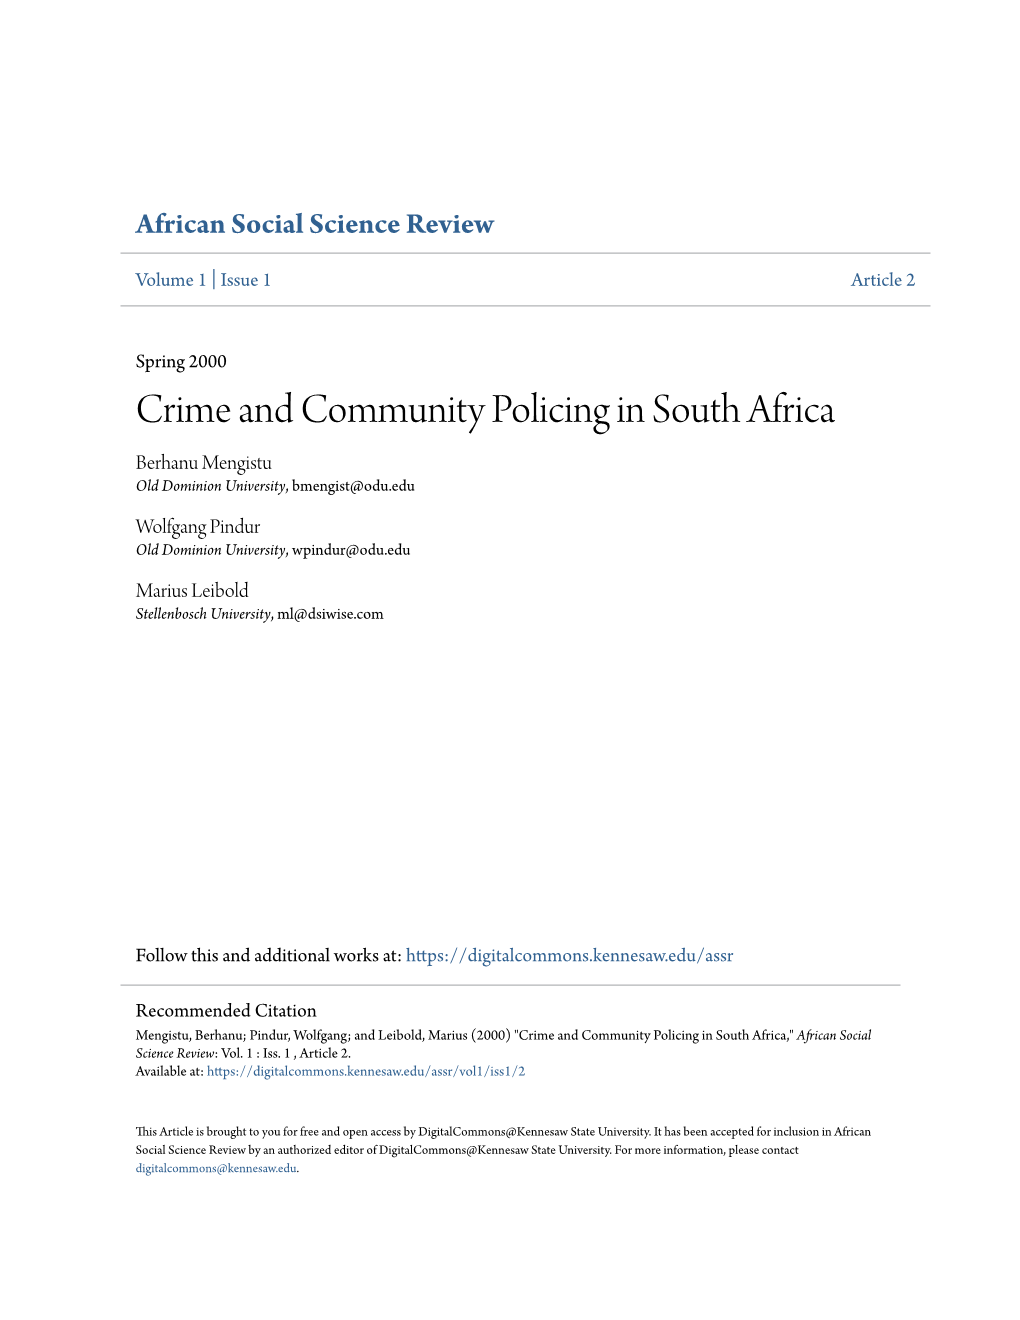 Crime and Community Policing in South Africa Berhanu Mengistu Old Dominion University, Bmengist@Odu.Edu